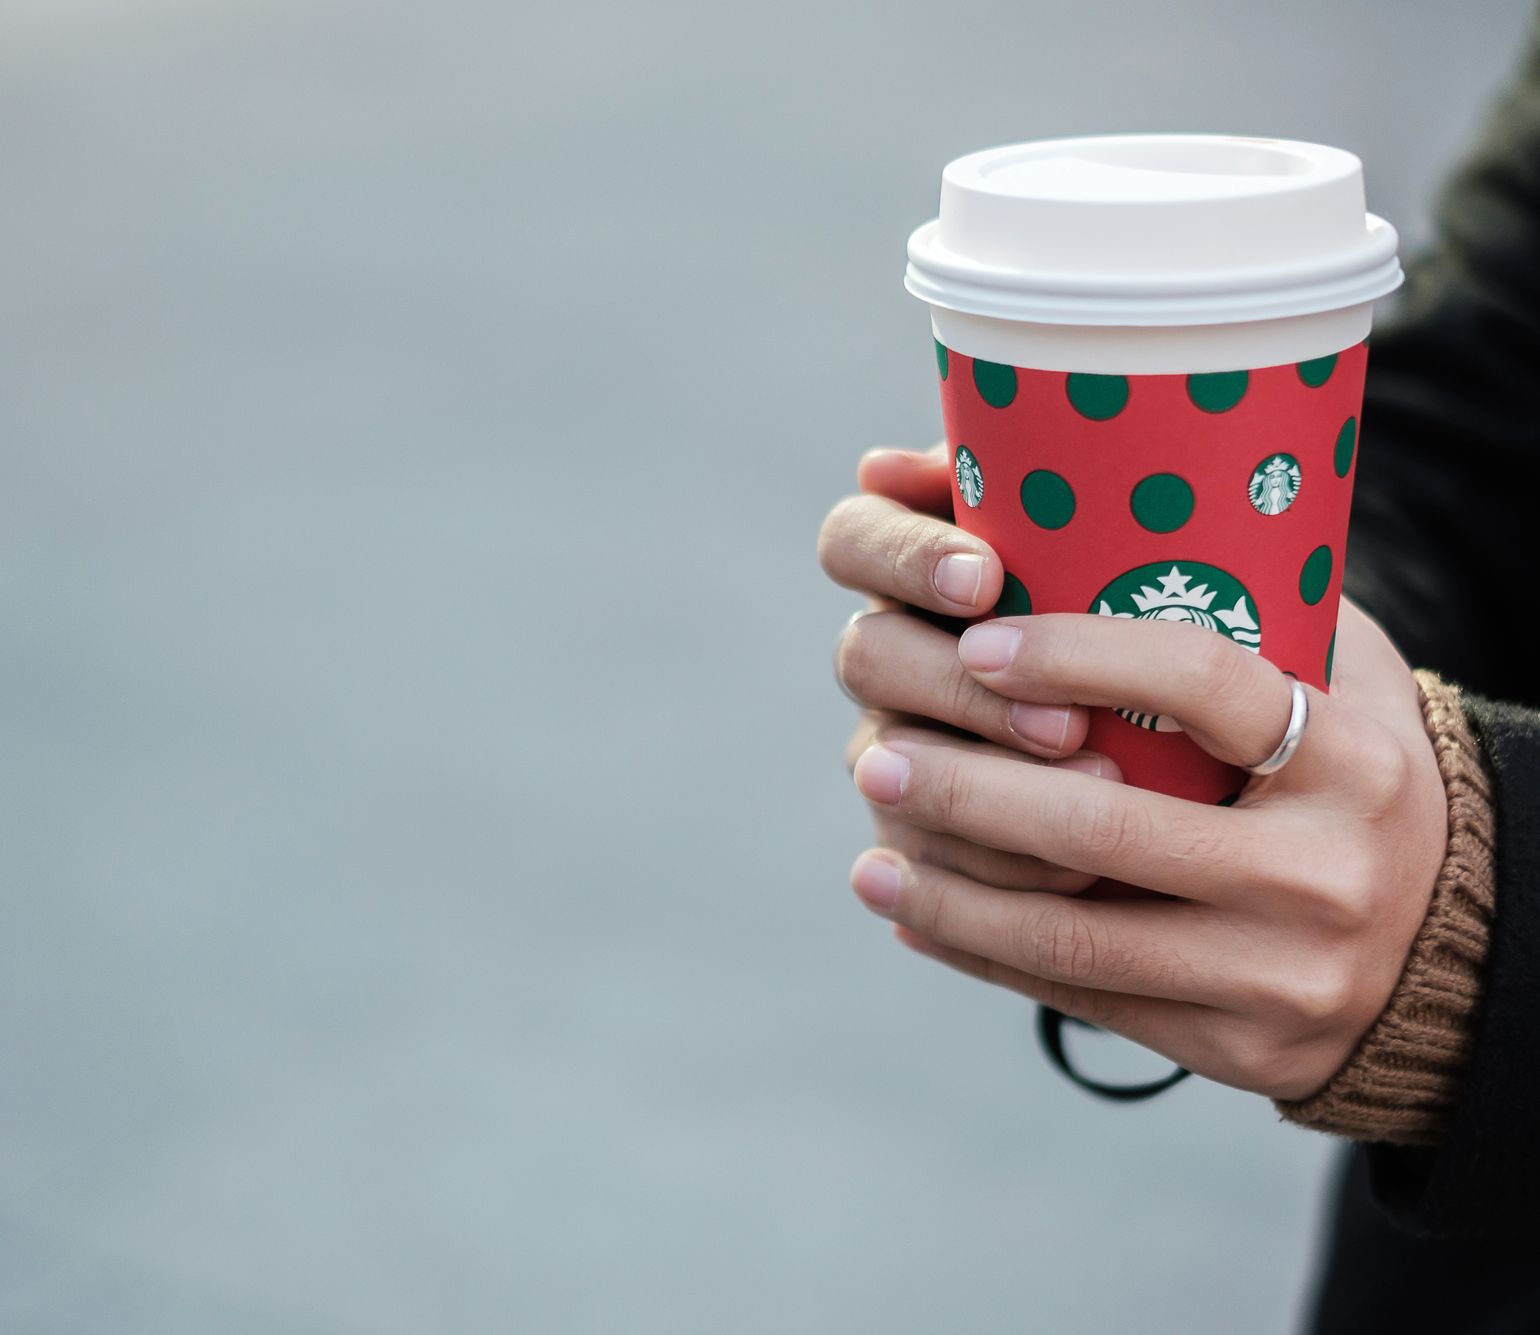 Starbucks Christmas Menu Drinks Eggnogg Toffee Nut Latte